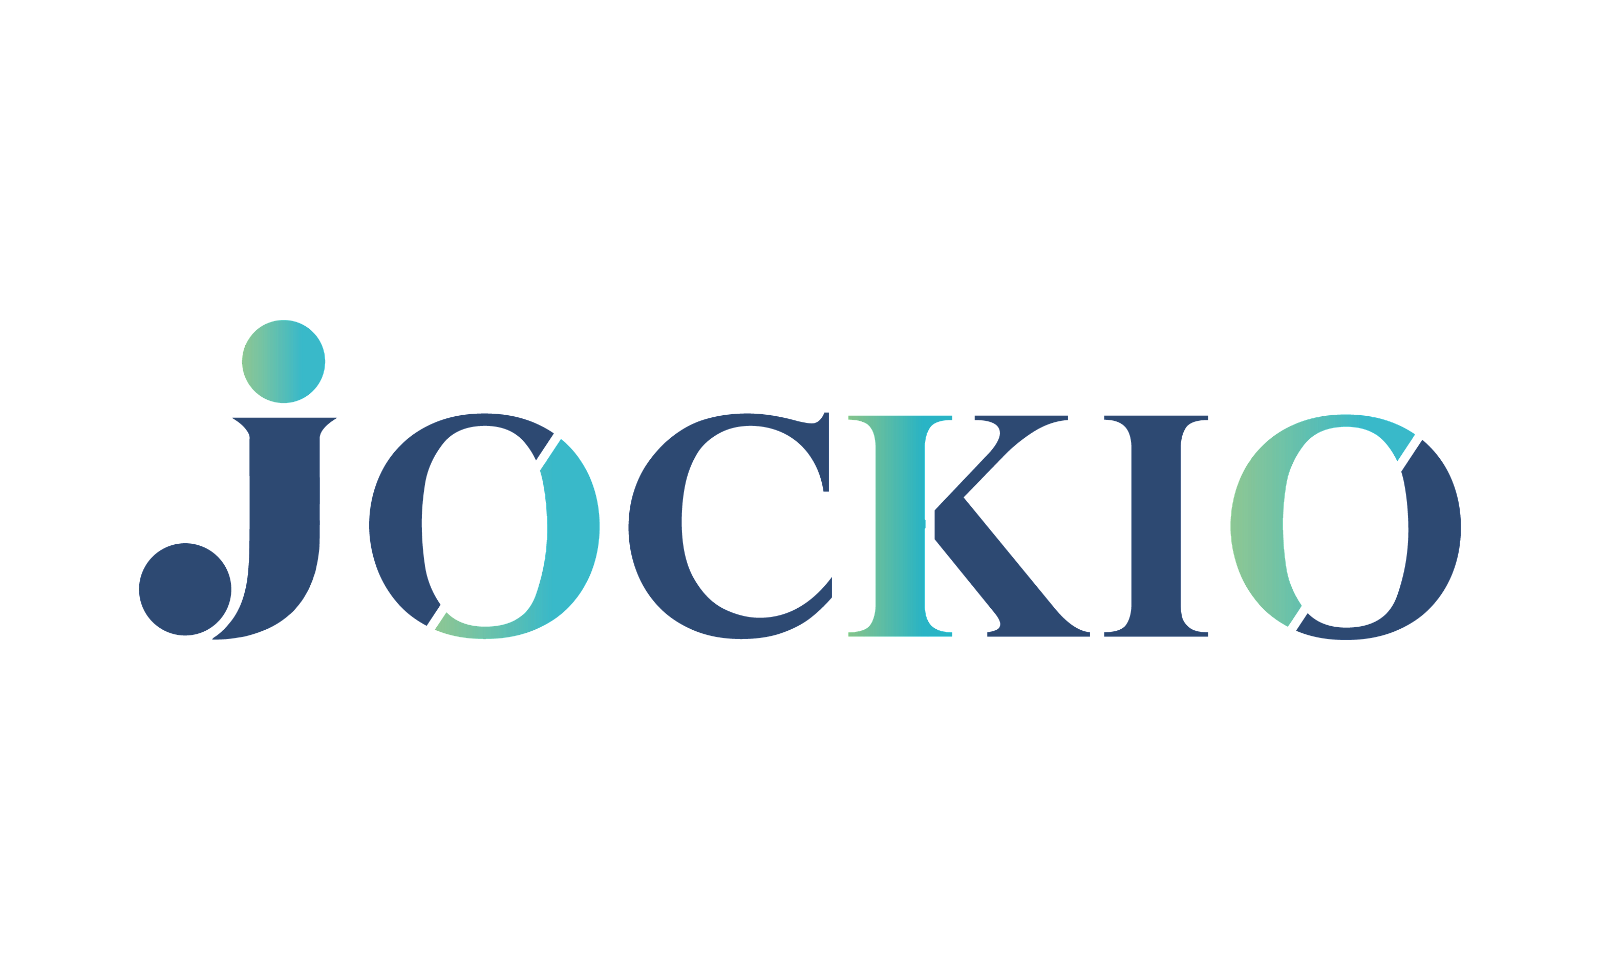 Jockio.com - Creative brandable domain for sale